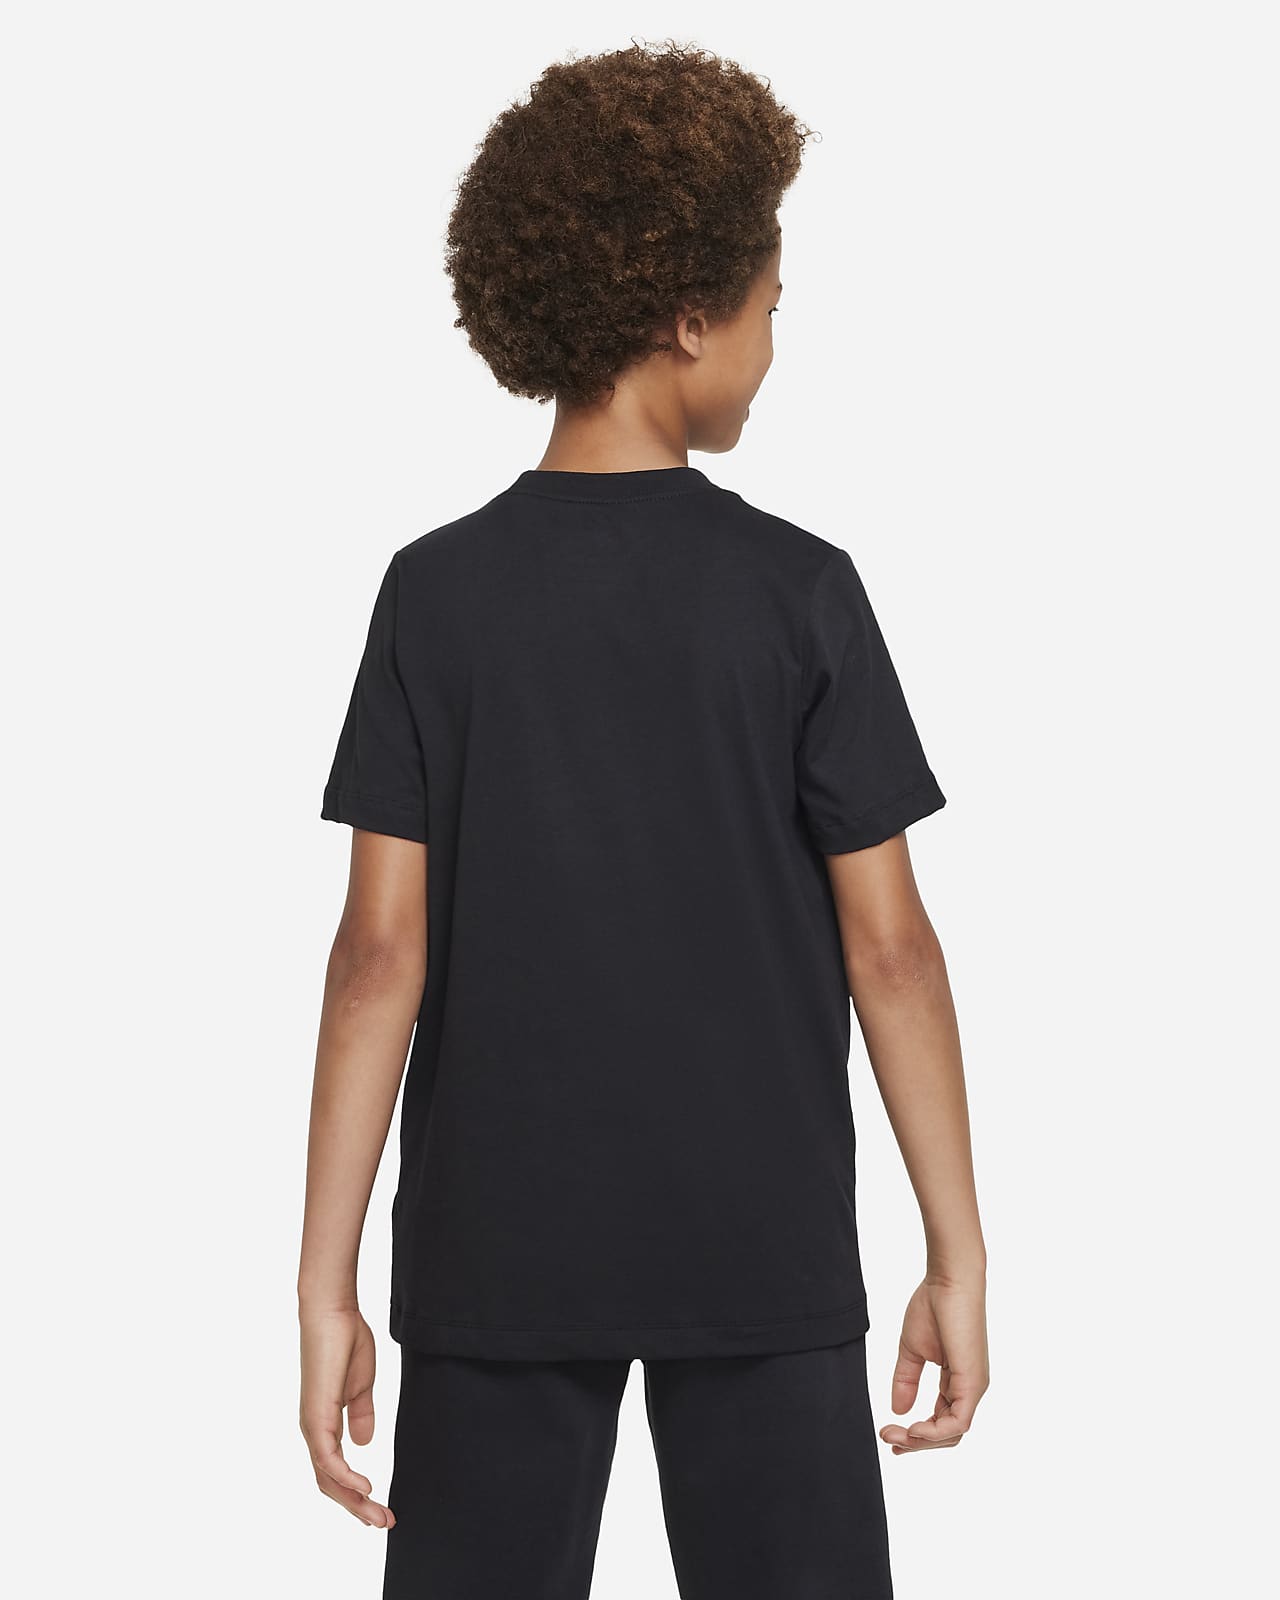 Big Kids (XS - XL) Nike Alate Clothing.